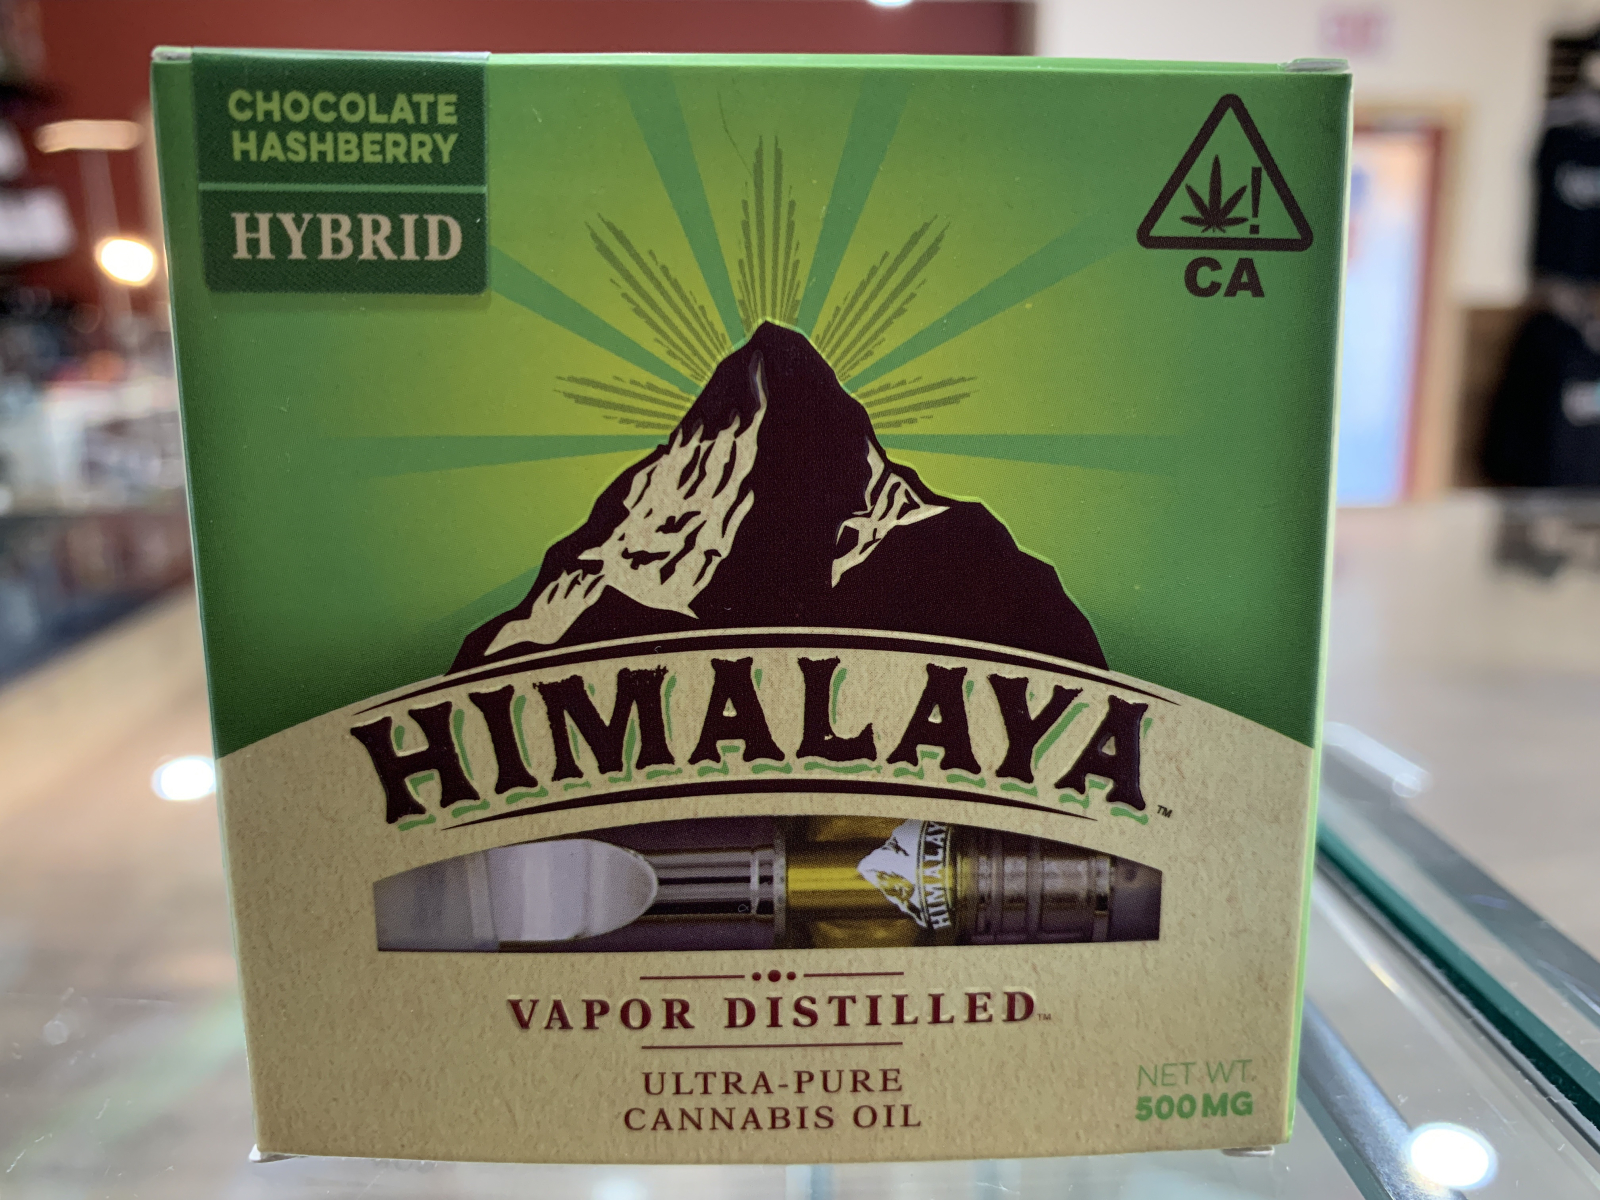 Himalaya chocolate hashberry half gram cartridge